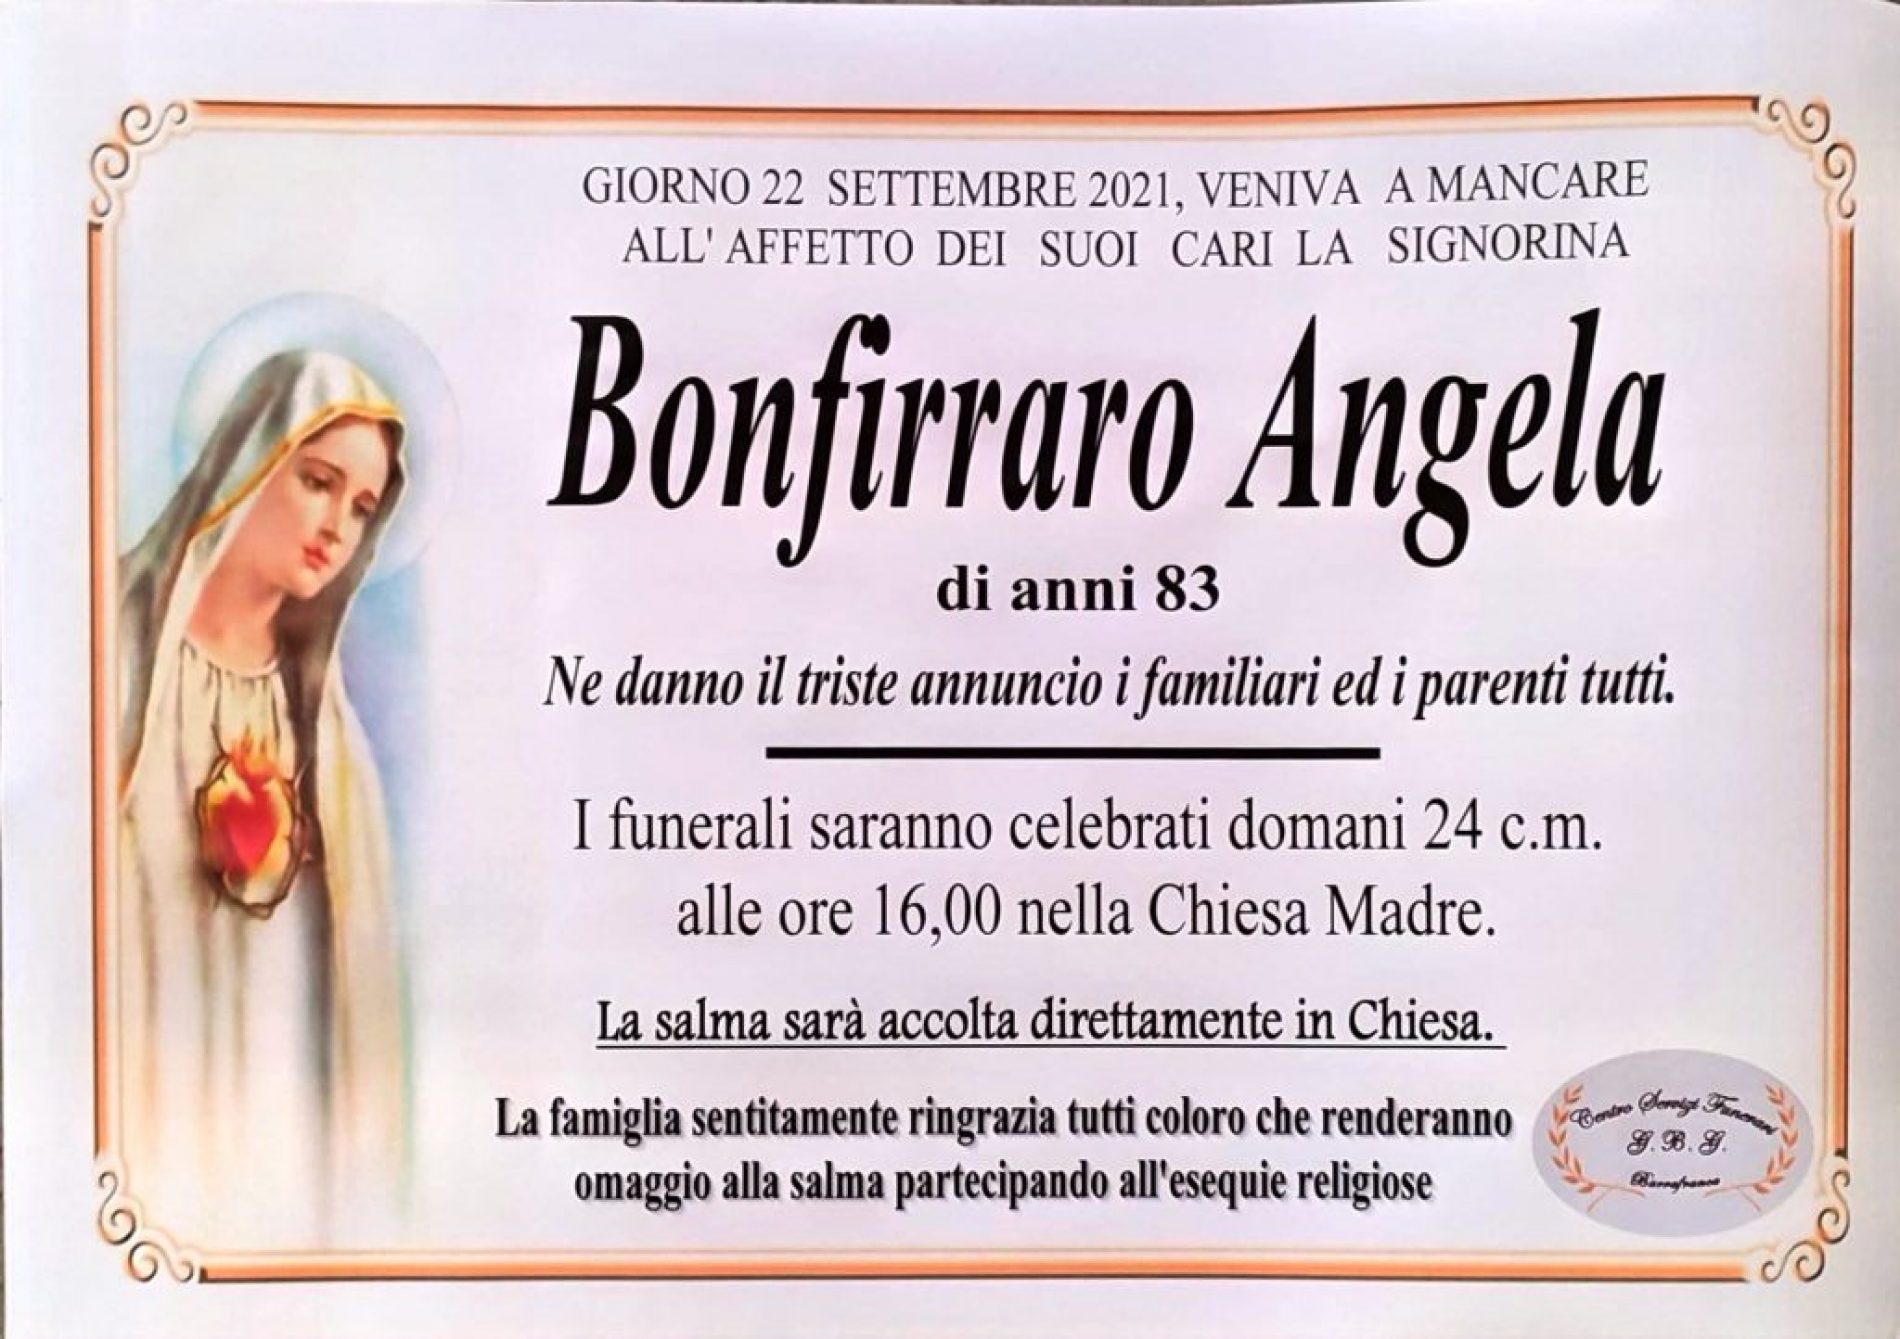 Annuncio servizi funerari agenzia G.B.G. sig.ra Bonfirraro Angela di anni 83